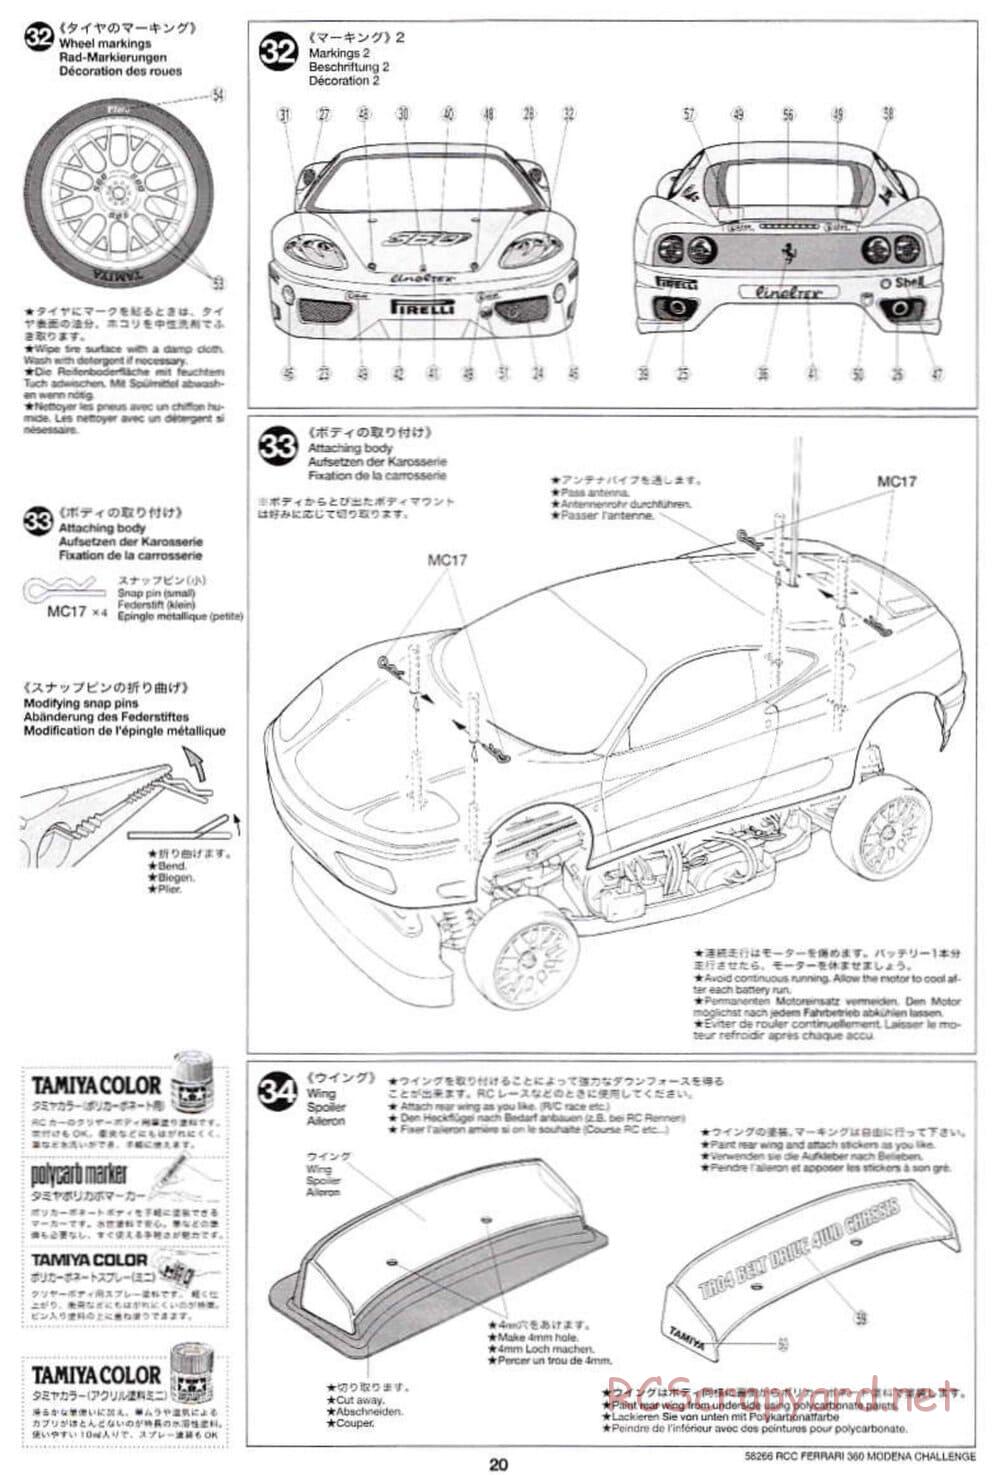 Tamiya - Ferrari 360 Modena Challenge - TA-04 Chassis - Manual - Page 20